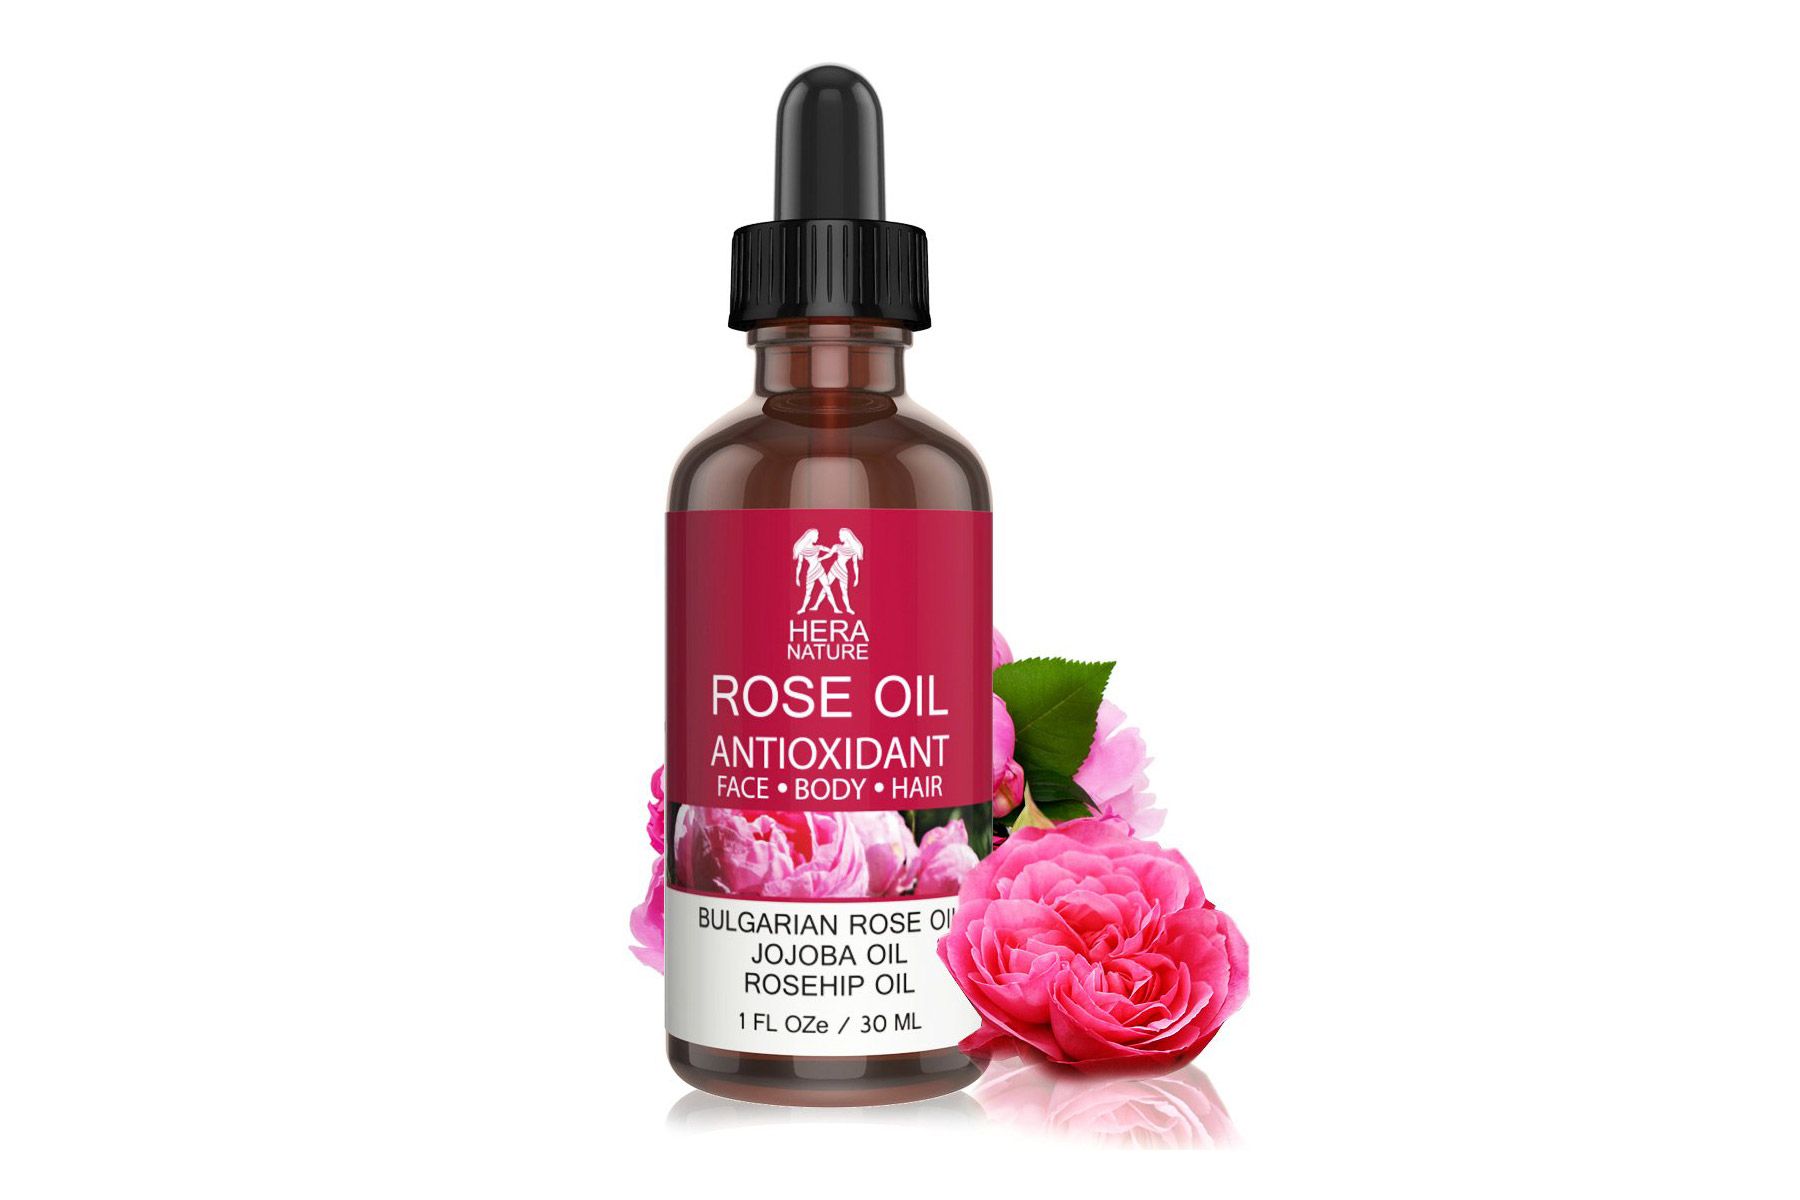 Hera Nature's Antioxidant Rose Oil